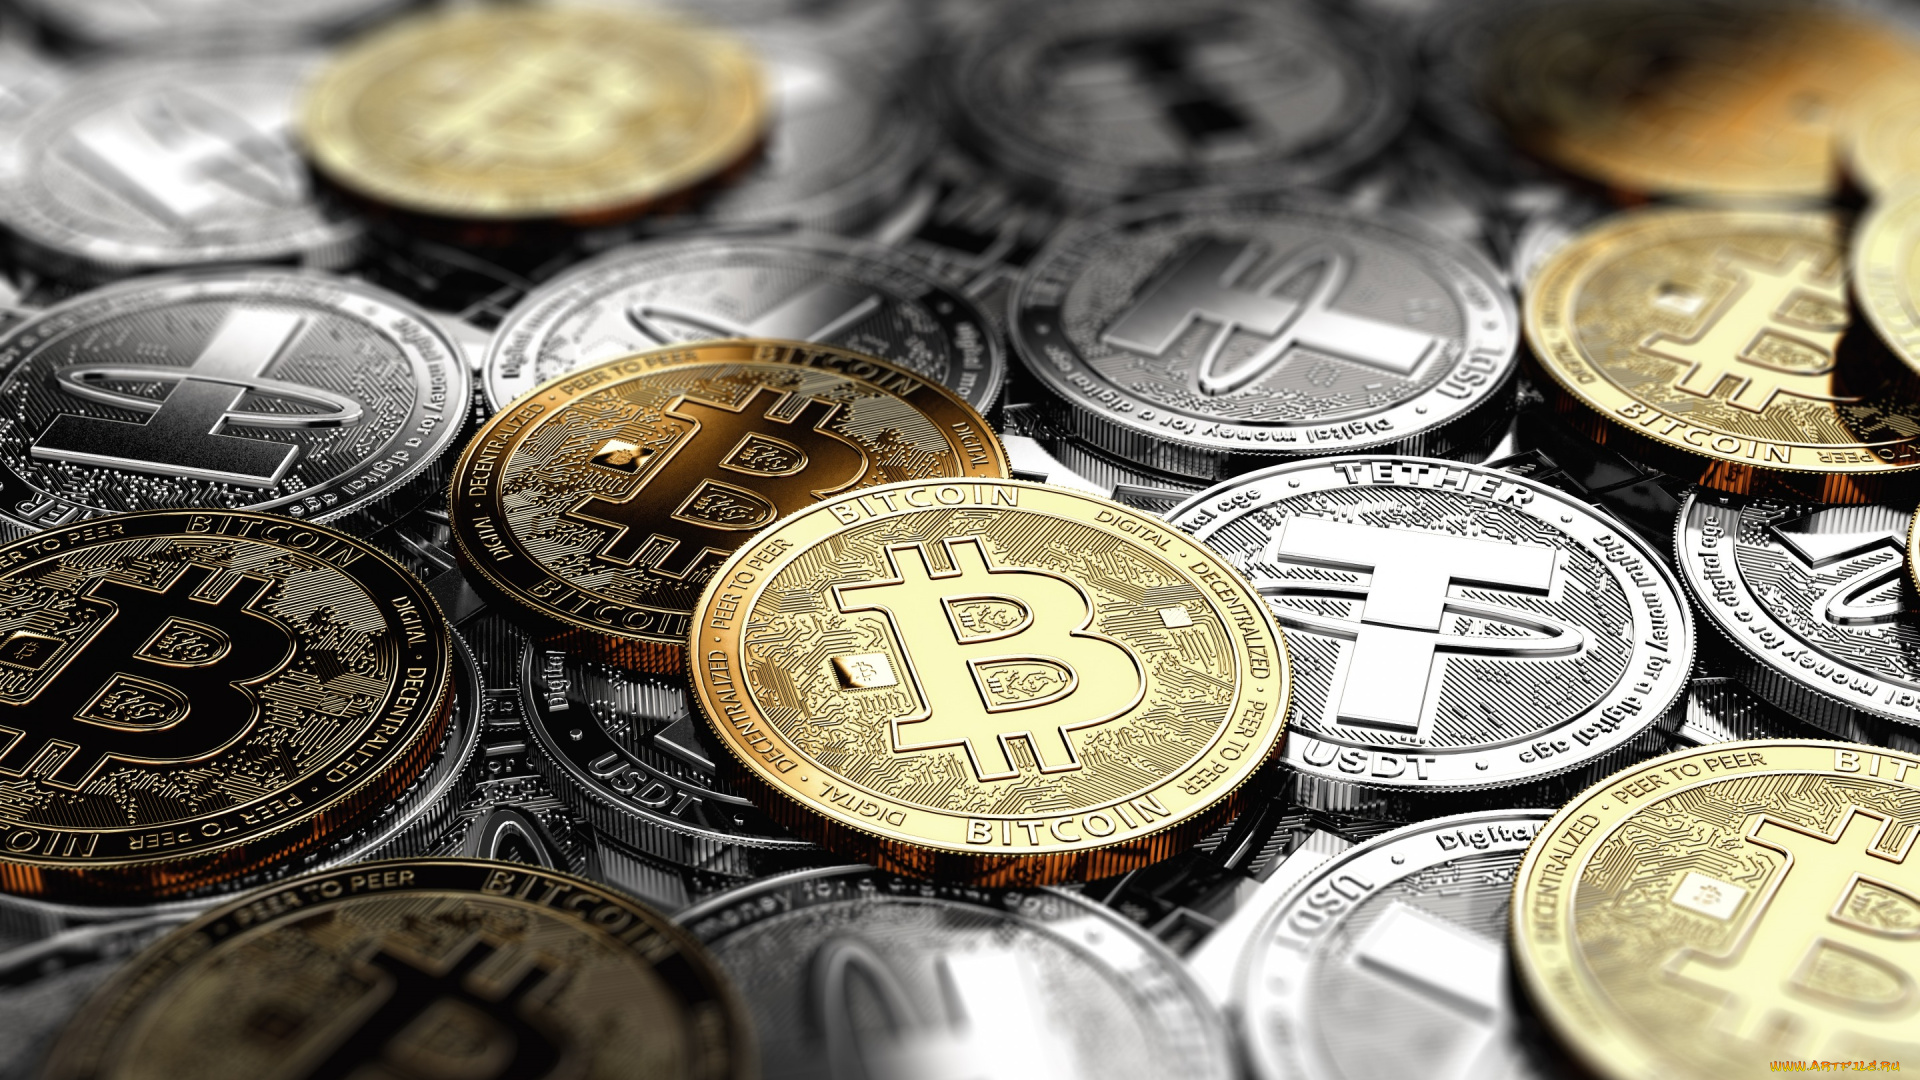 bitcoin, , tether, криптовалюта, разное, золото, , купюры, , монеты, золотая, монета, gold, coin, signs, of, crypto, currencies, tether, электронные, деньги, currency, business, криптовалюта, electronic, money